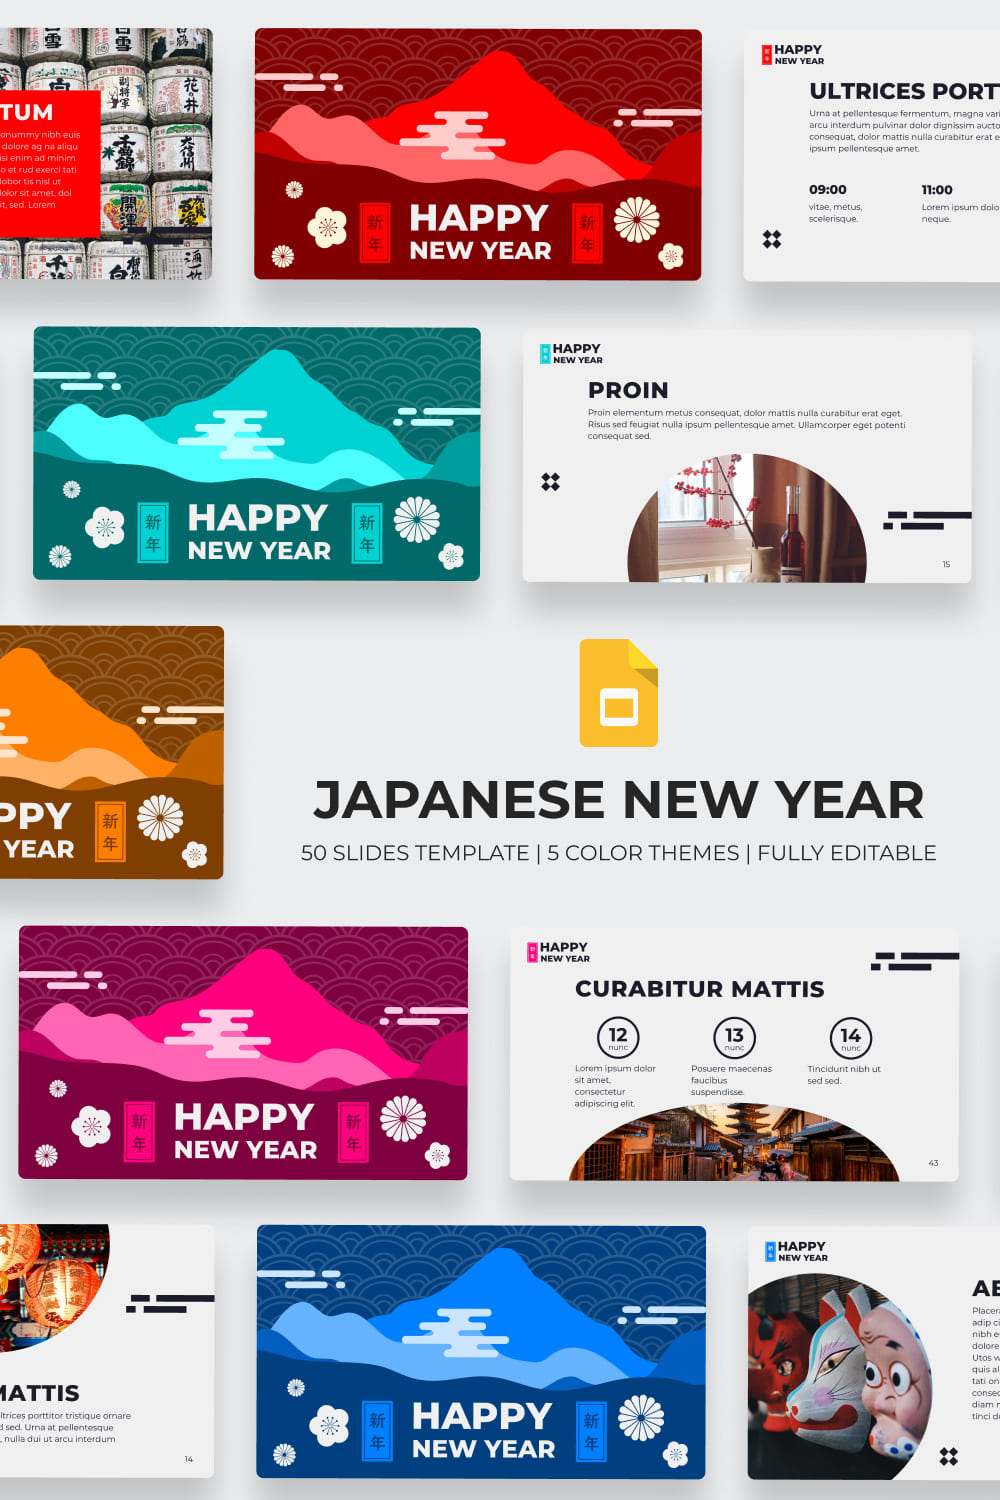 Japan New Year Google Slides Theme.